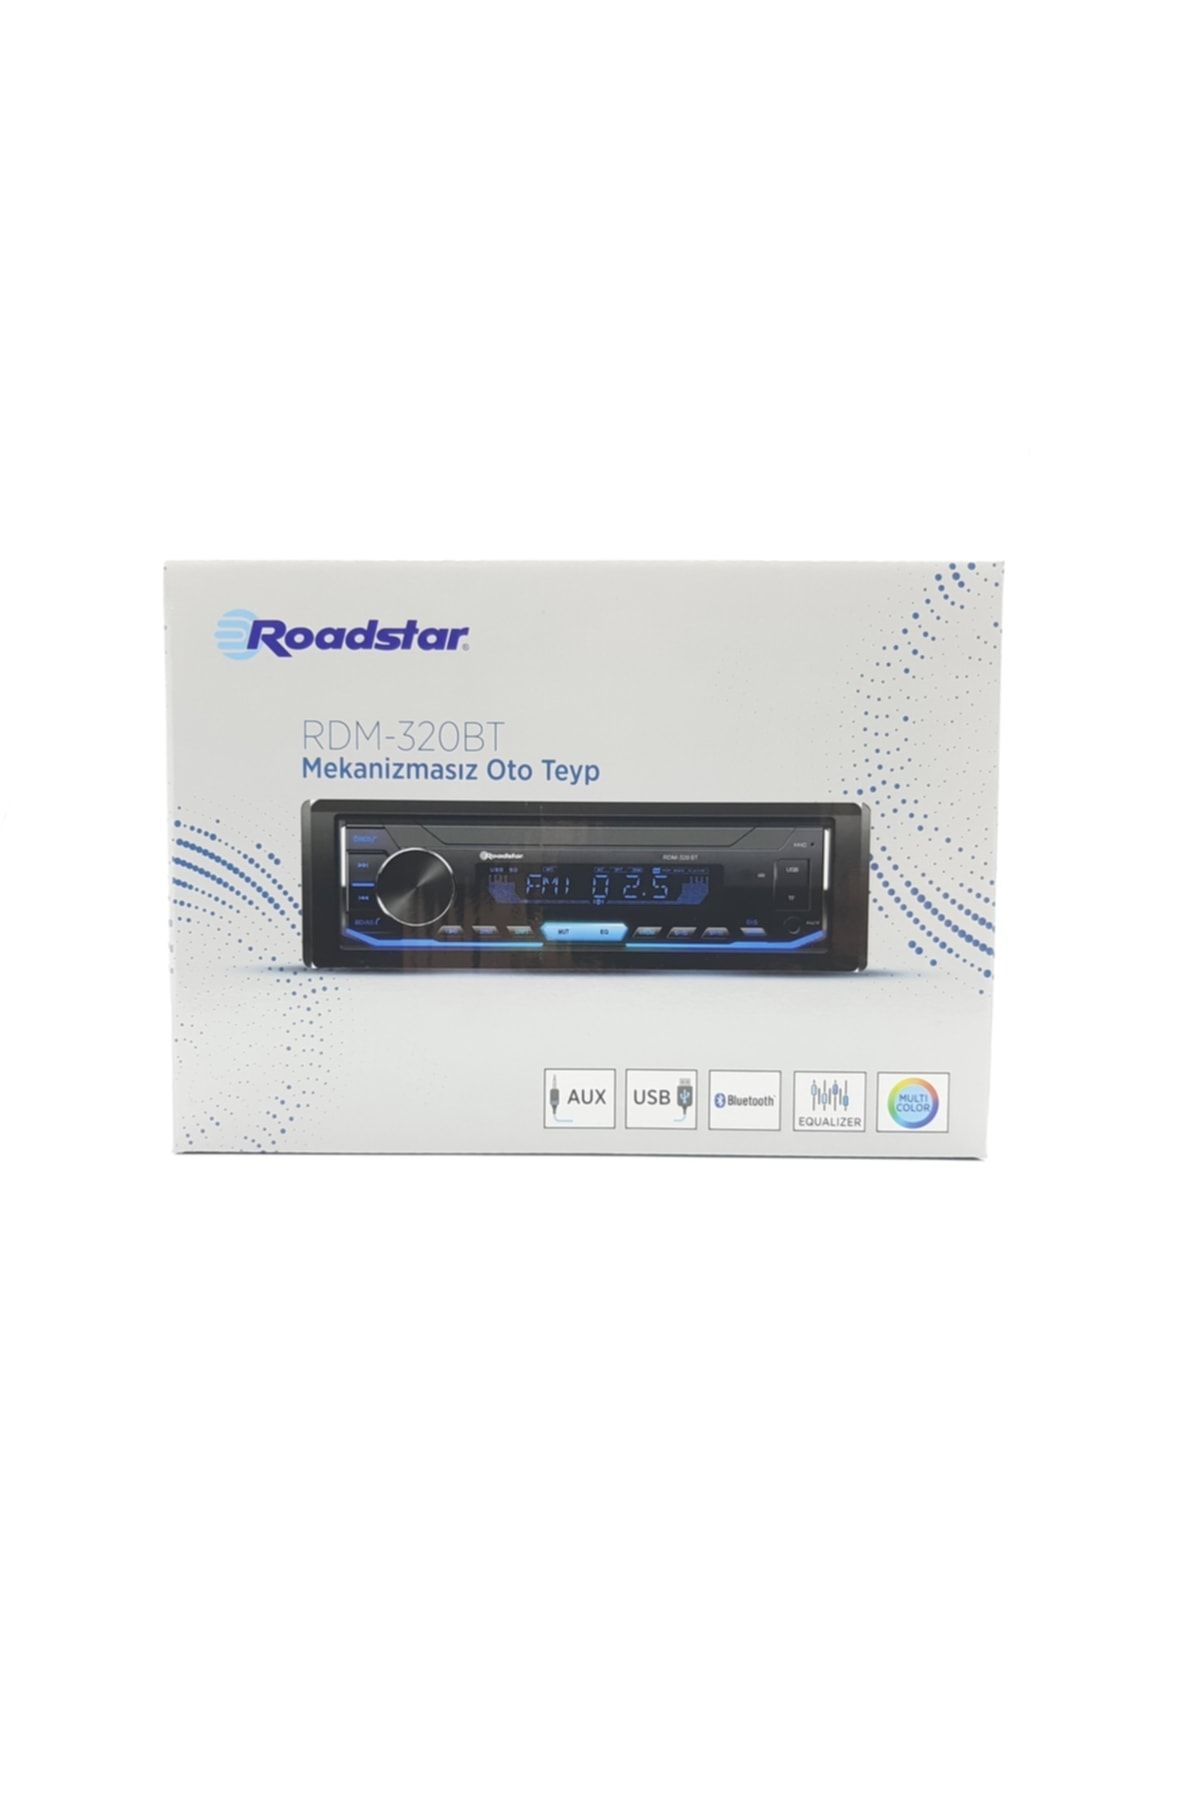 Roadstar Rs-5257 Bluetoothlu Usbli Oto Teyp Kaliteli